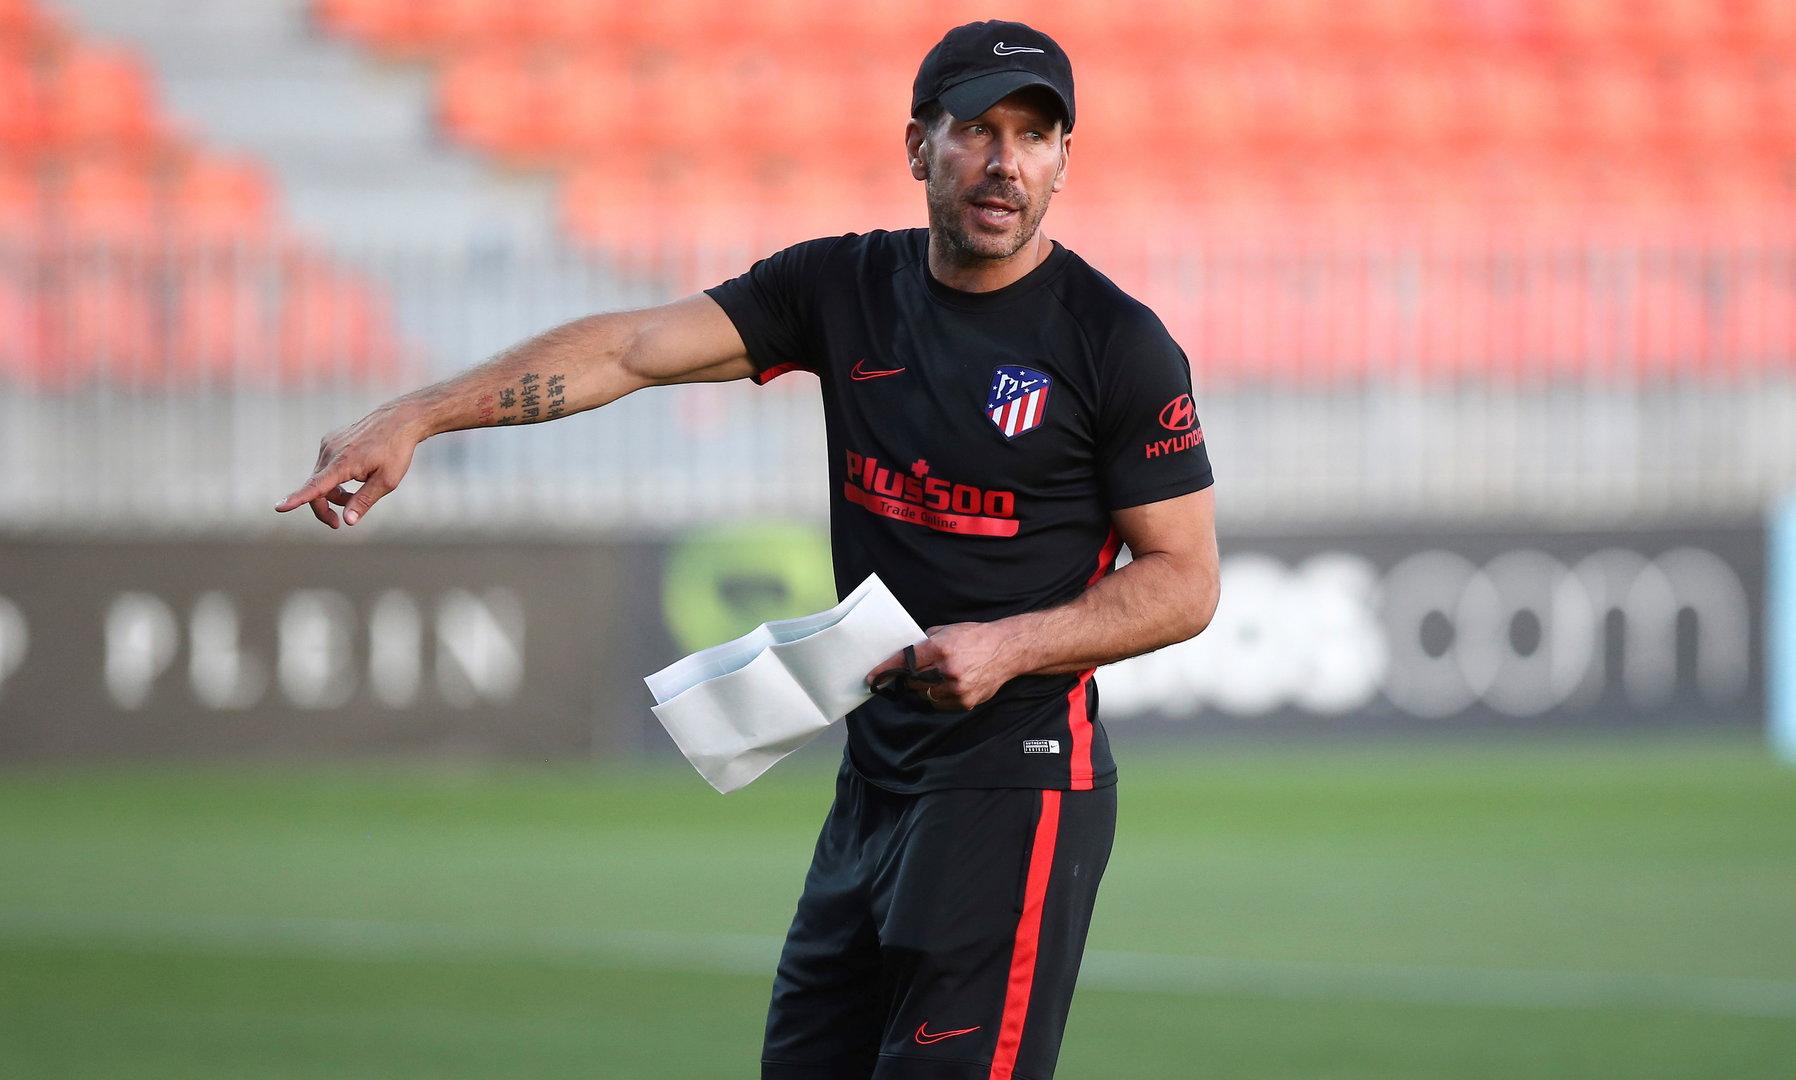 Zwei positive Corona-Tests im Umfeld von Atlético Madrid